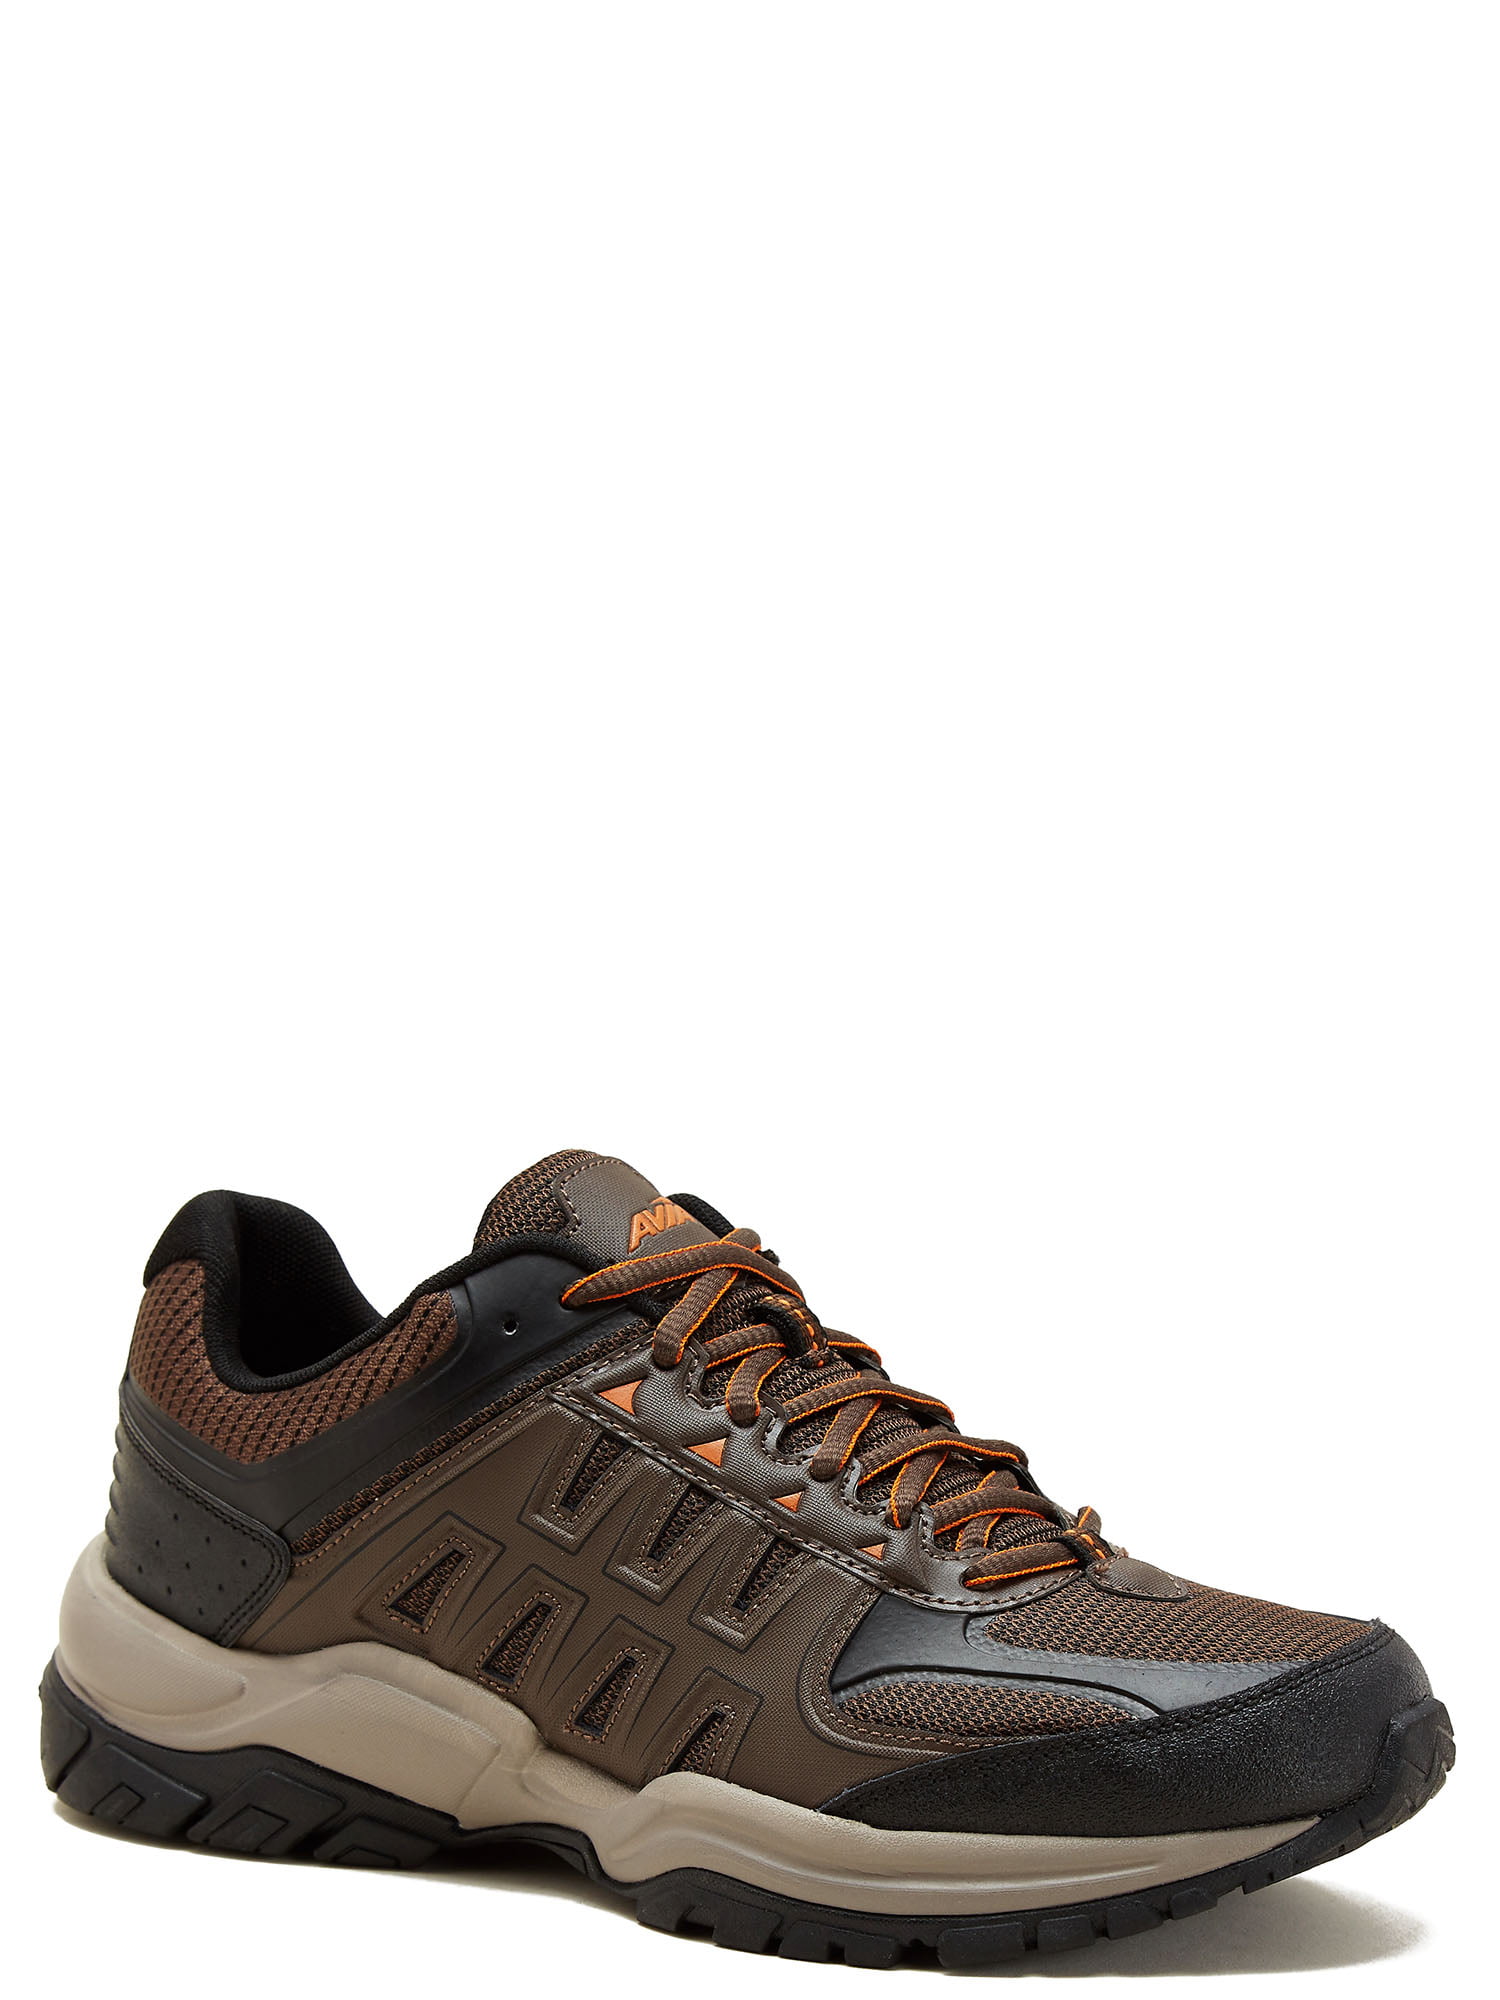 Avia Men's Jag Athletic Shoe (multiple widths) - Walmart.com